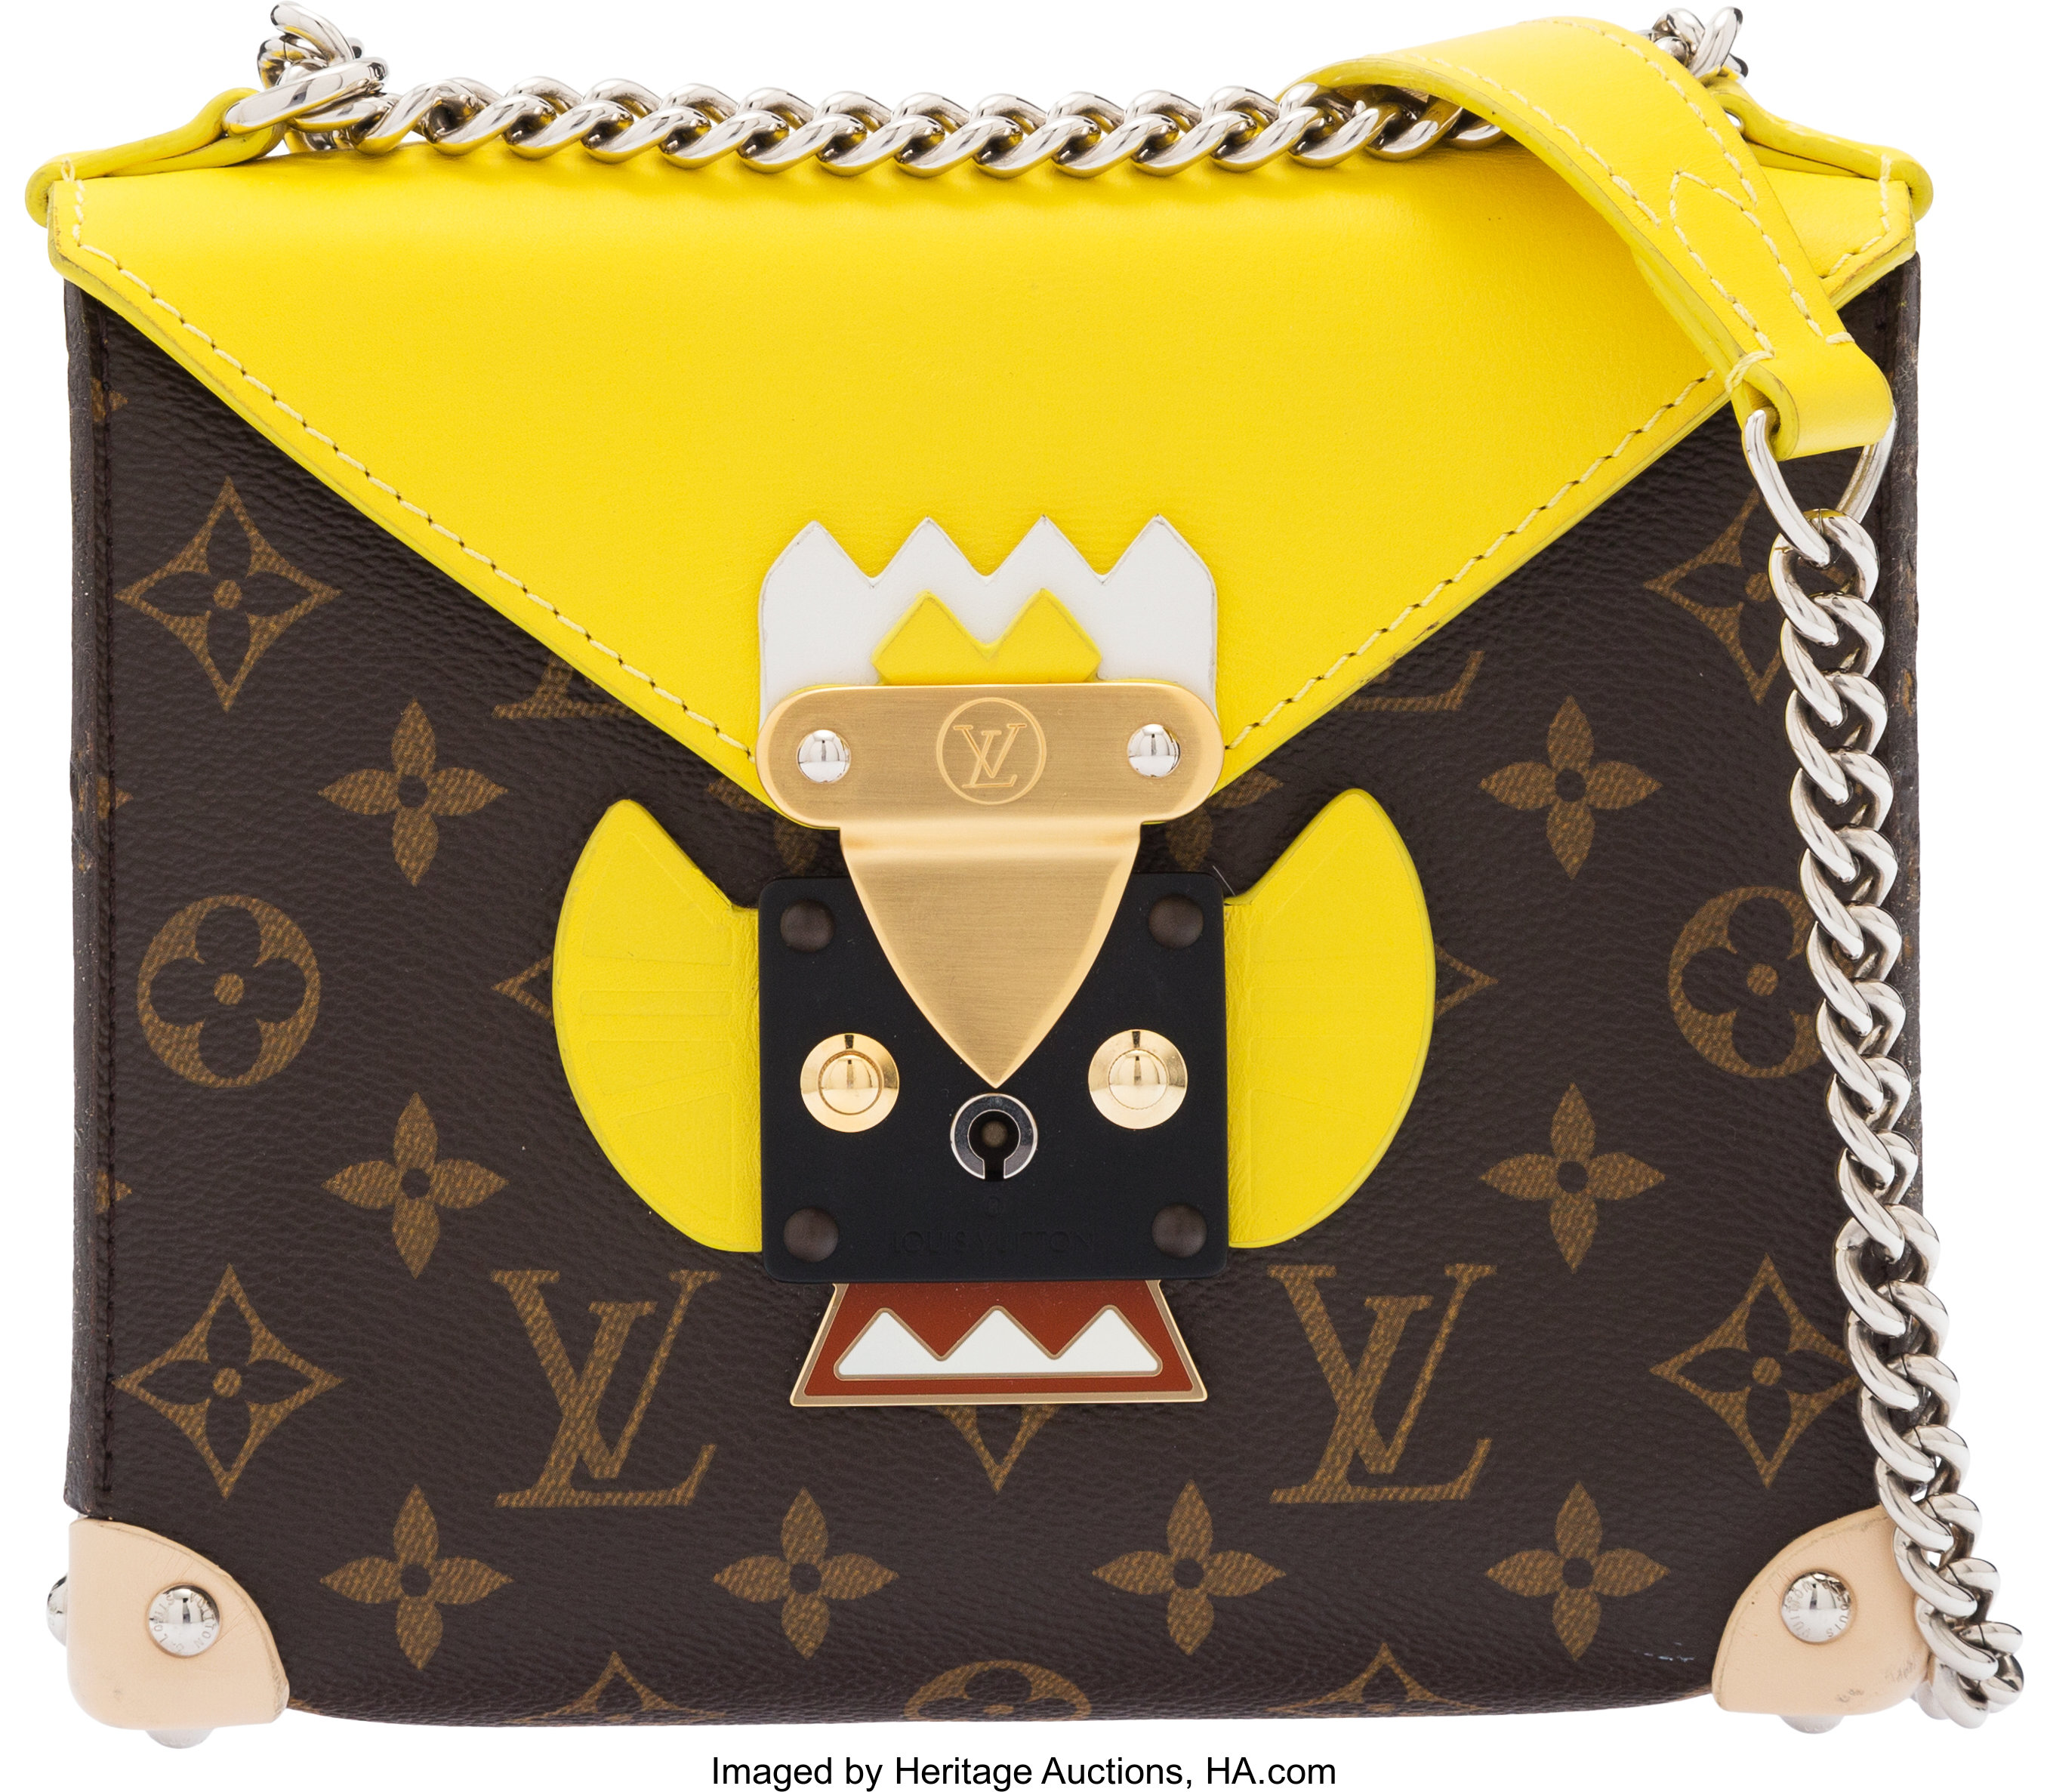 Louis Vuitton Tribal Mask Monogram Bag Yellow - THE PURSE AFFAIR